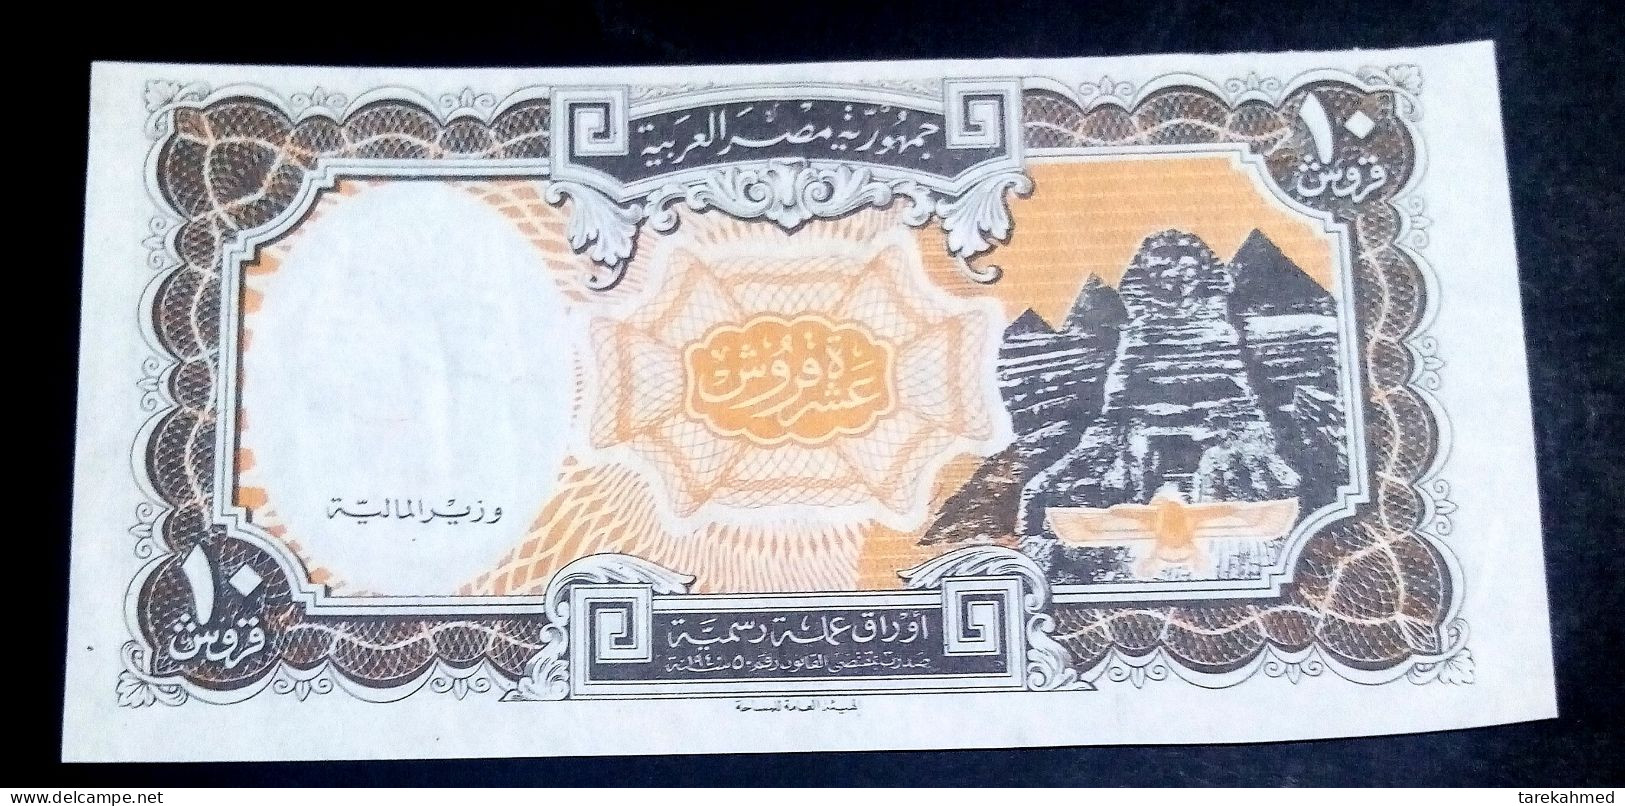 Egypt 1997, Rare Error 10 Piastres - No Arabic Signature No Serial Number  - UNC - Aegypten